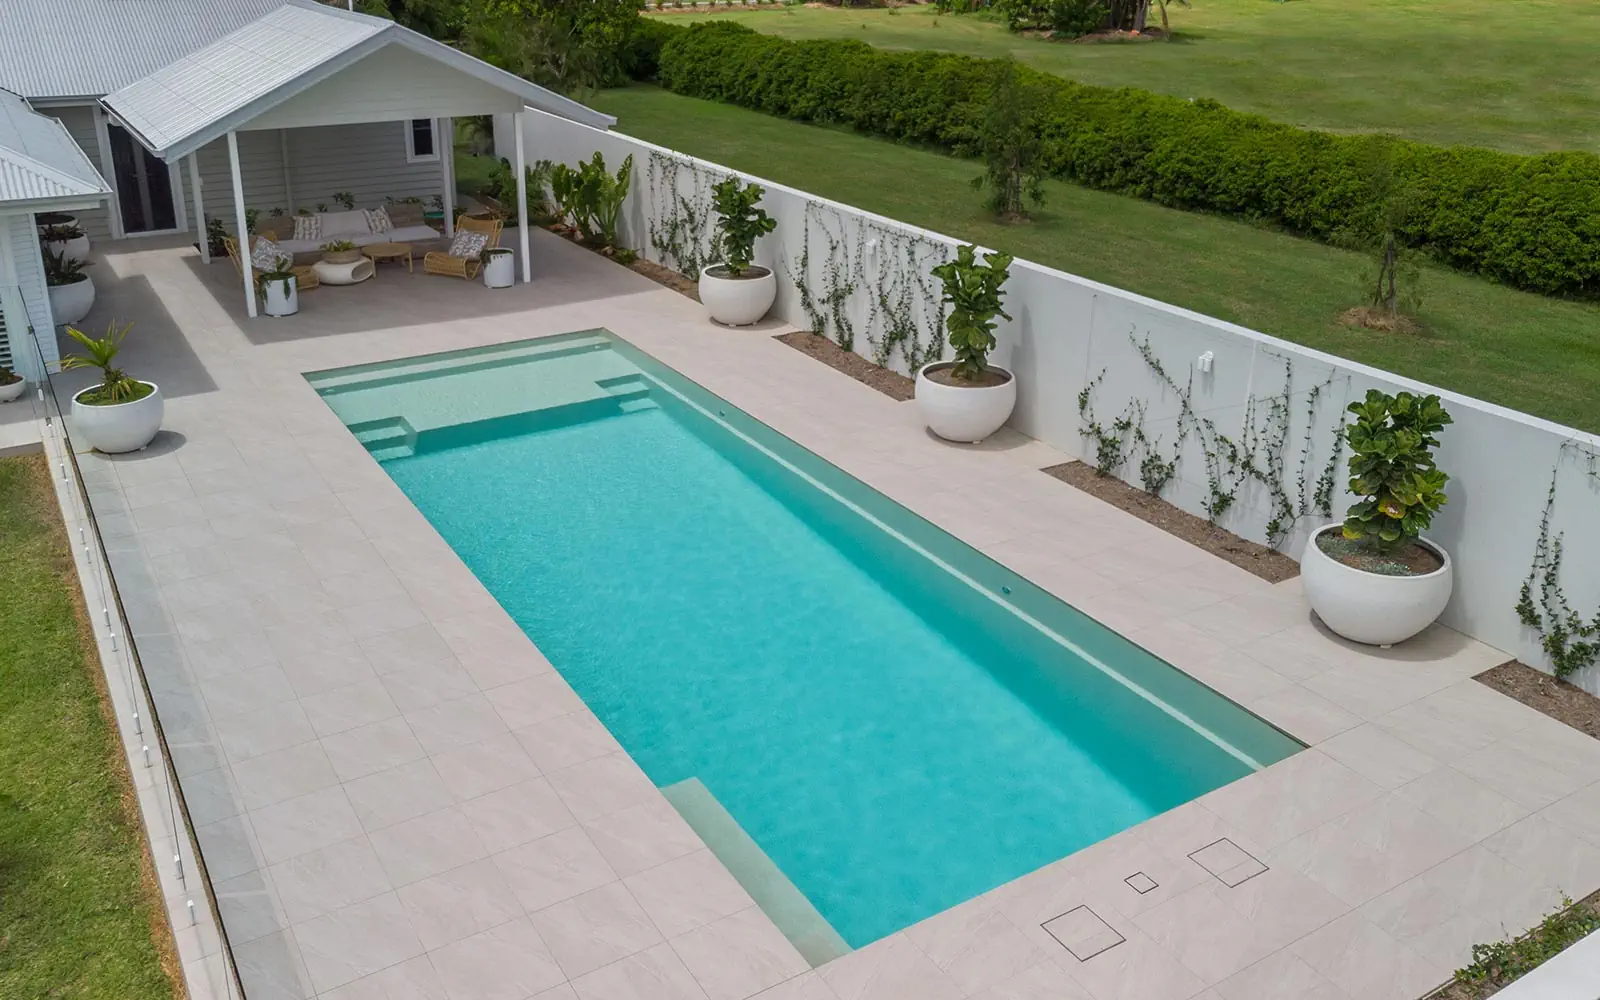 THe Acclaim fibreglass swimming pool with splash deck